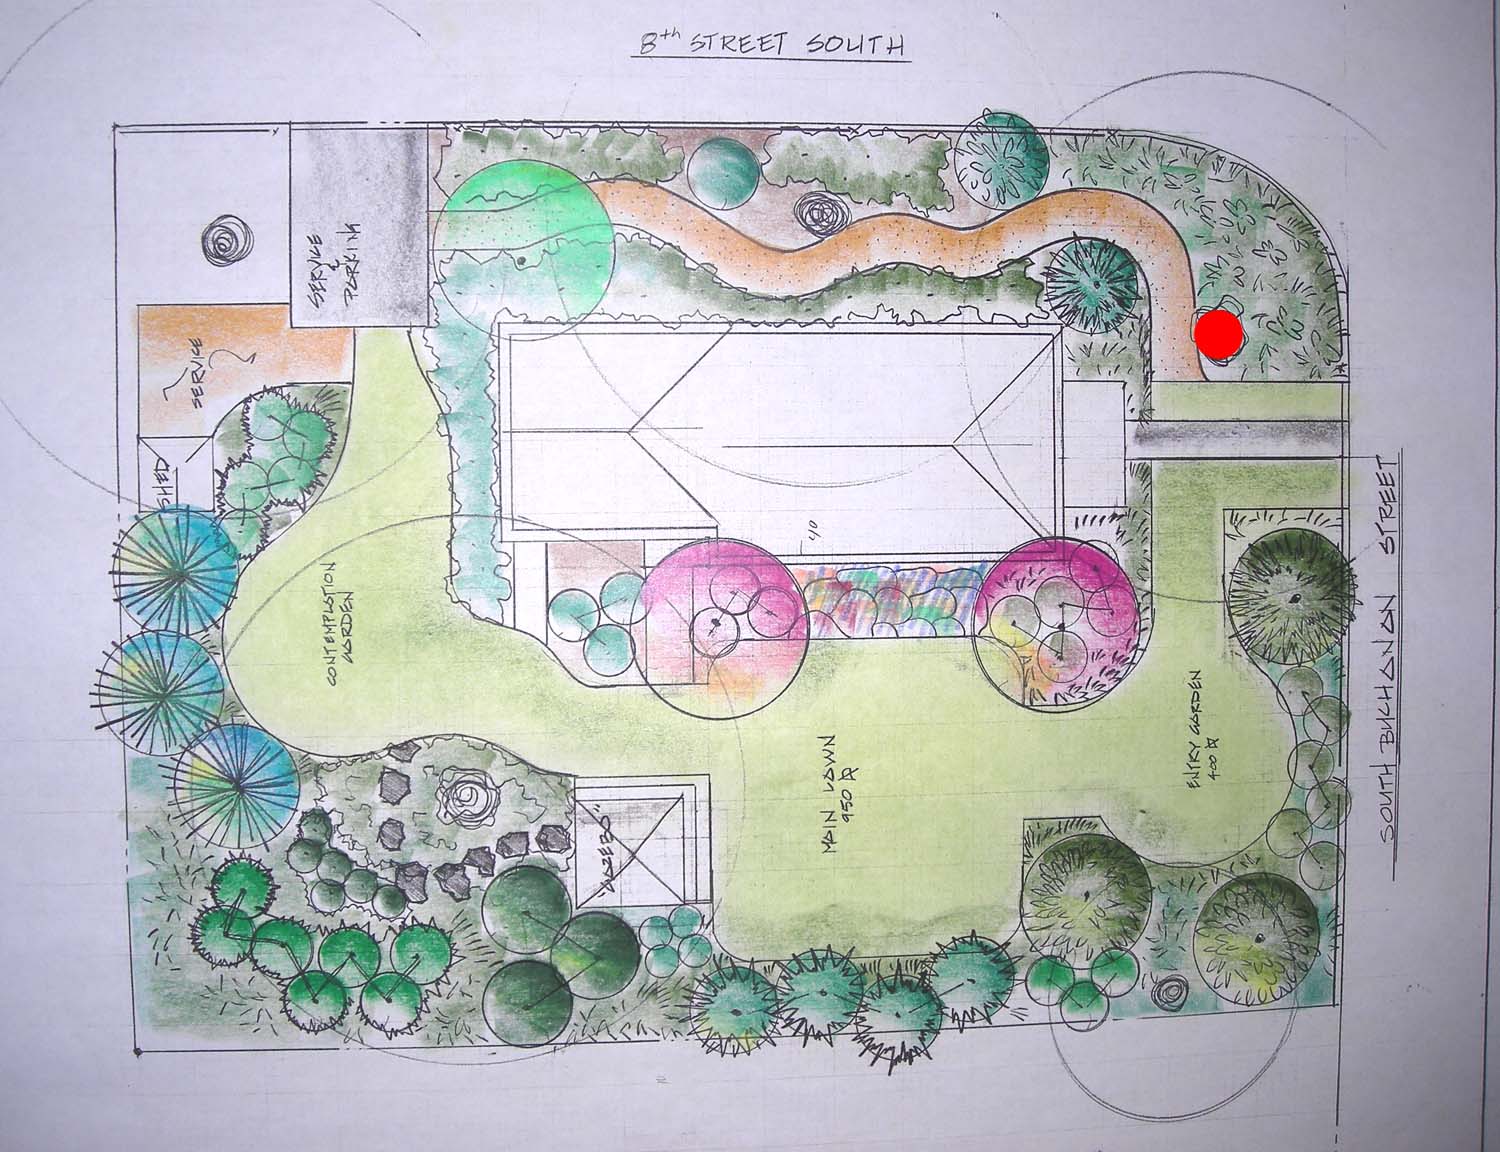 Scott's plan for the BCH garden